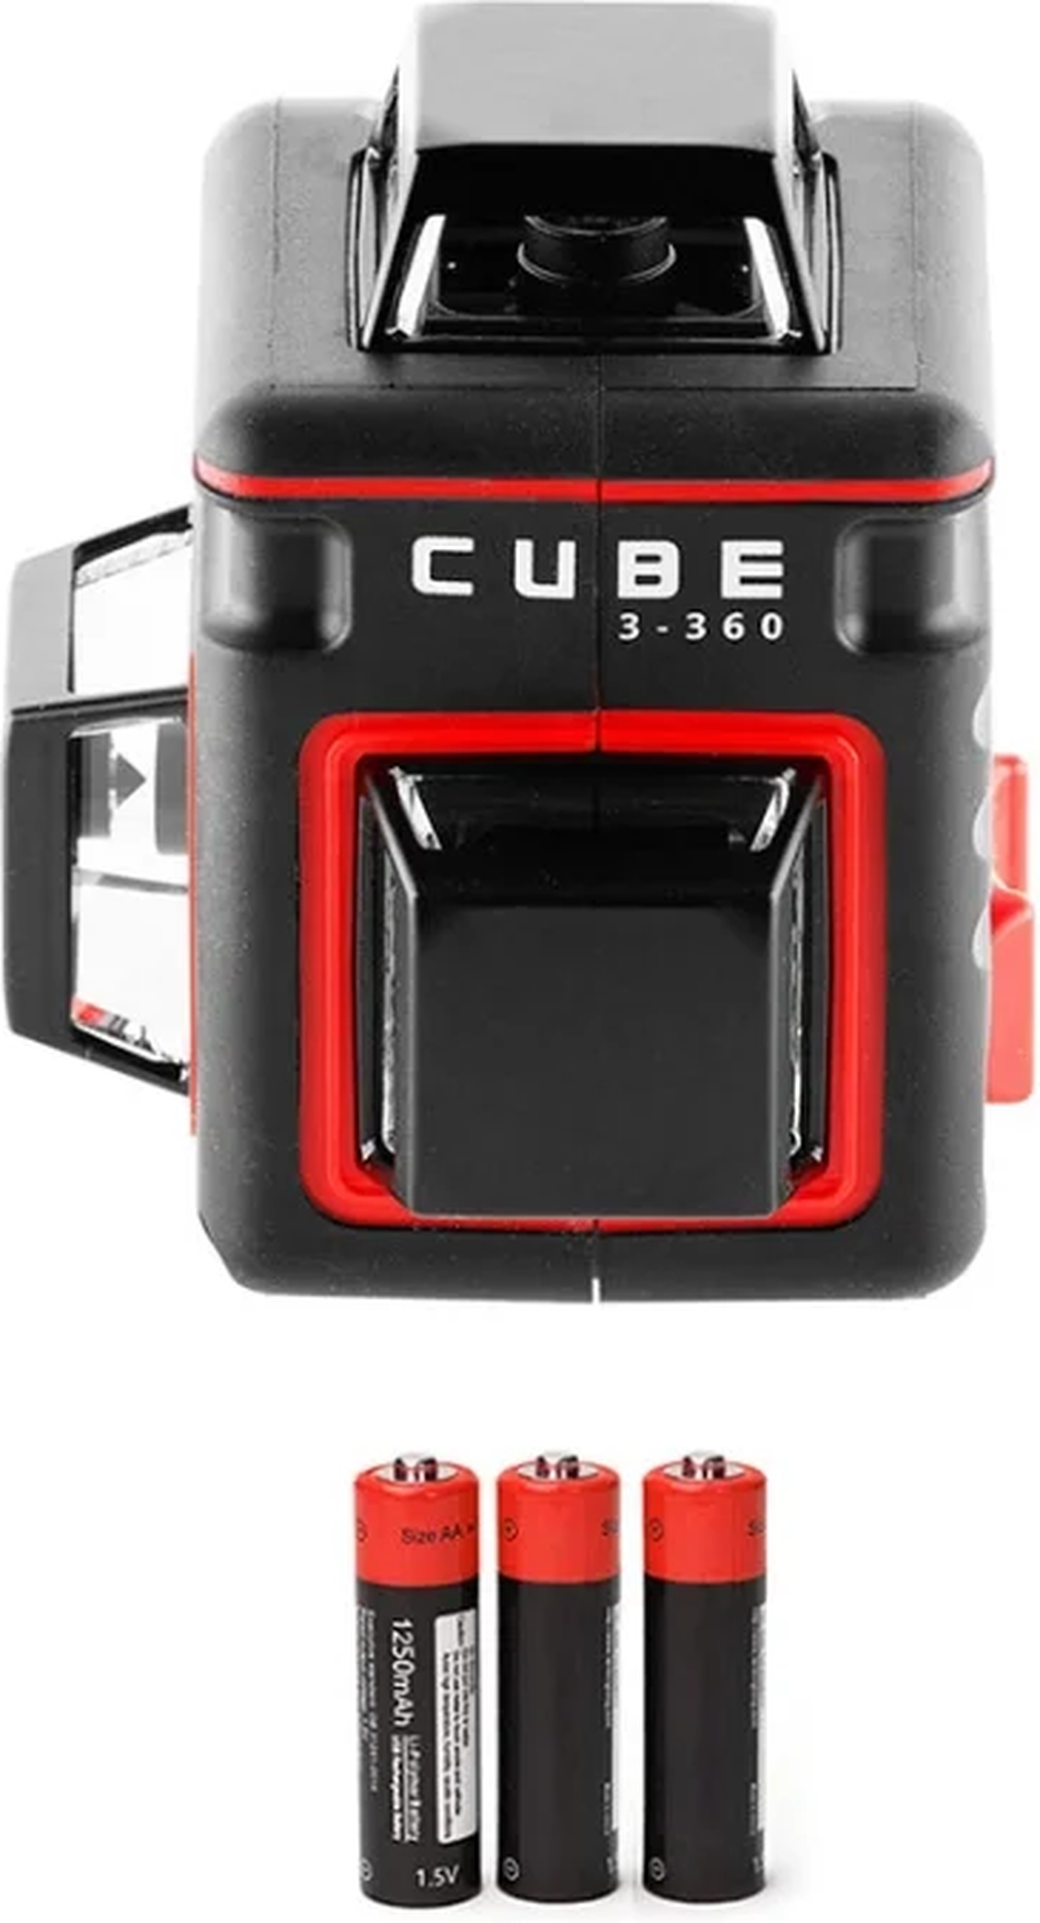 Cube 360 basic edition. Ada Cube 3-360 Basic Edition а00559. Лазерный уровень Cube 3-360 Basic Edition. Лазерный уровень самовыравнивающийся ada instruments Cube 3-360 Home Edition. Лазерный уровень ada Cube 360 Basic Edition.